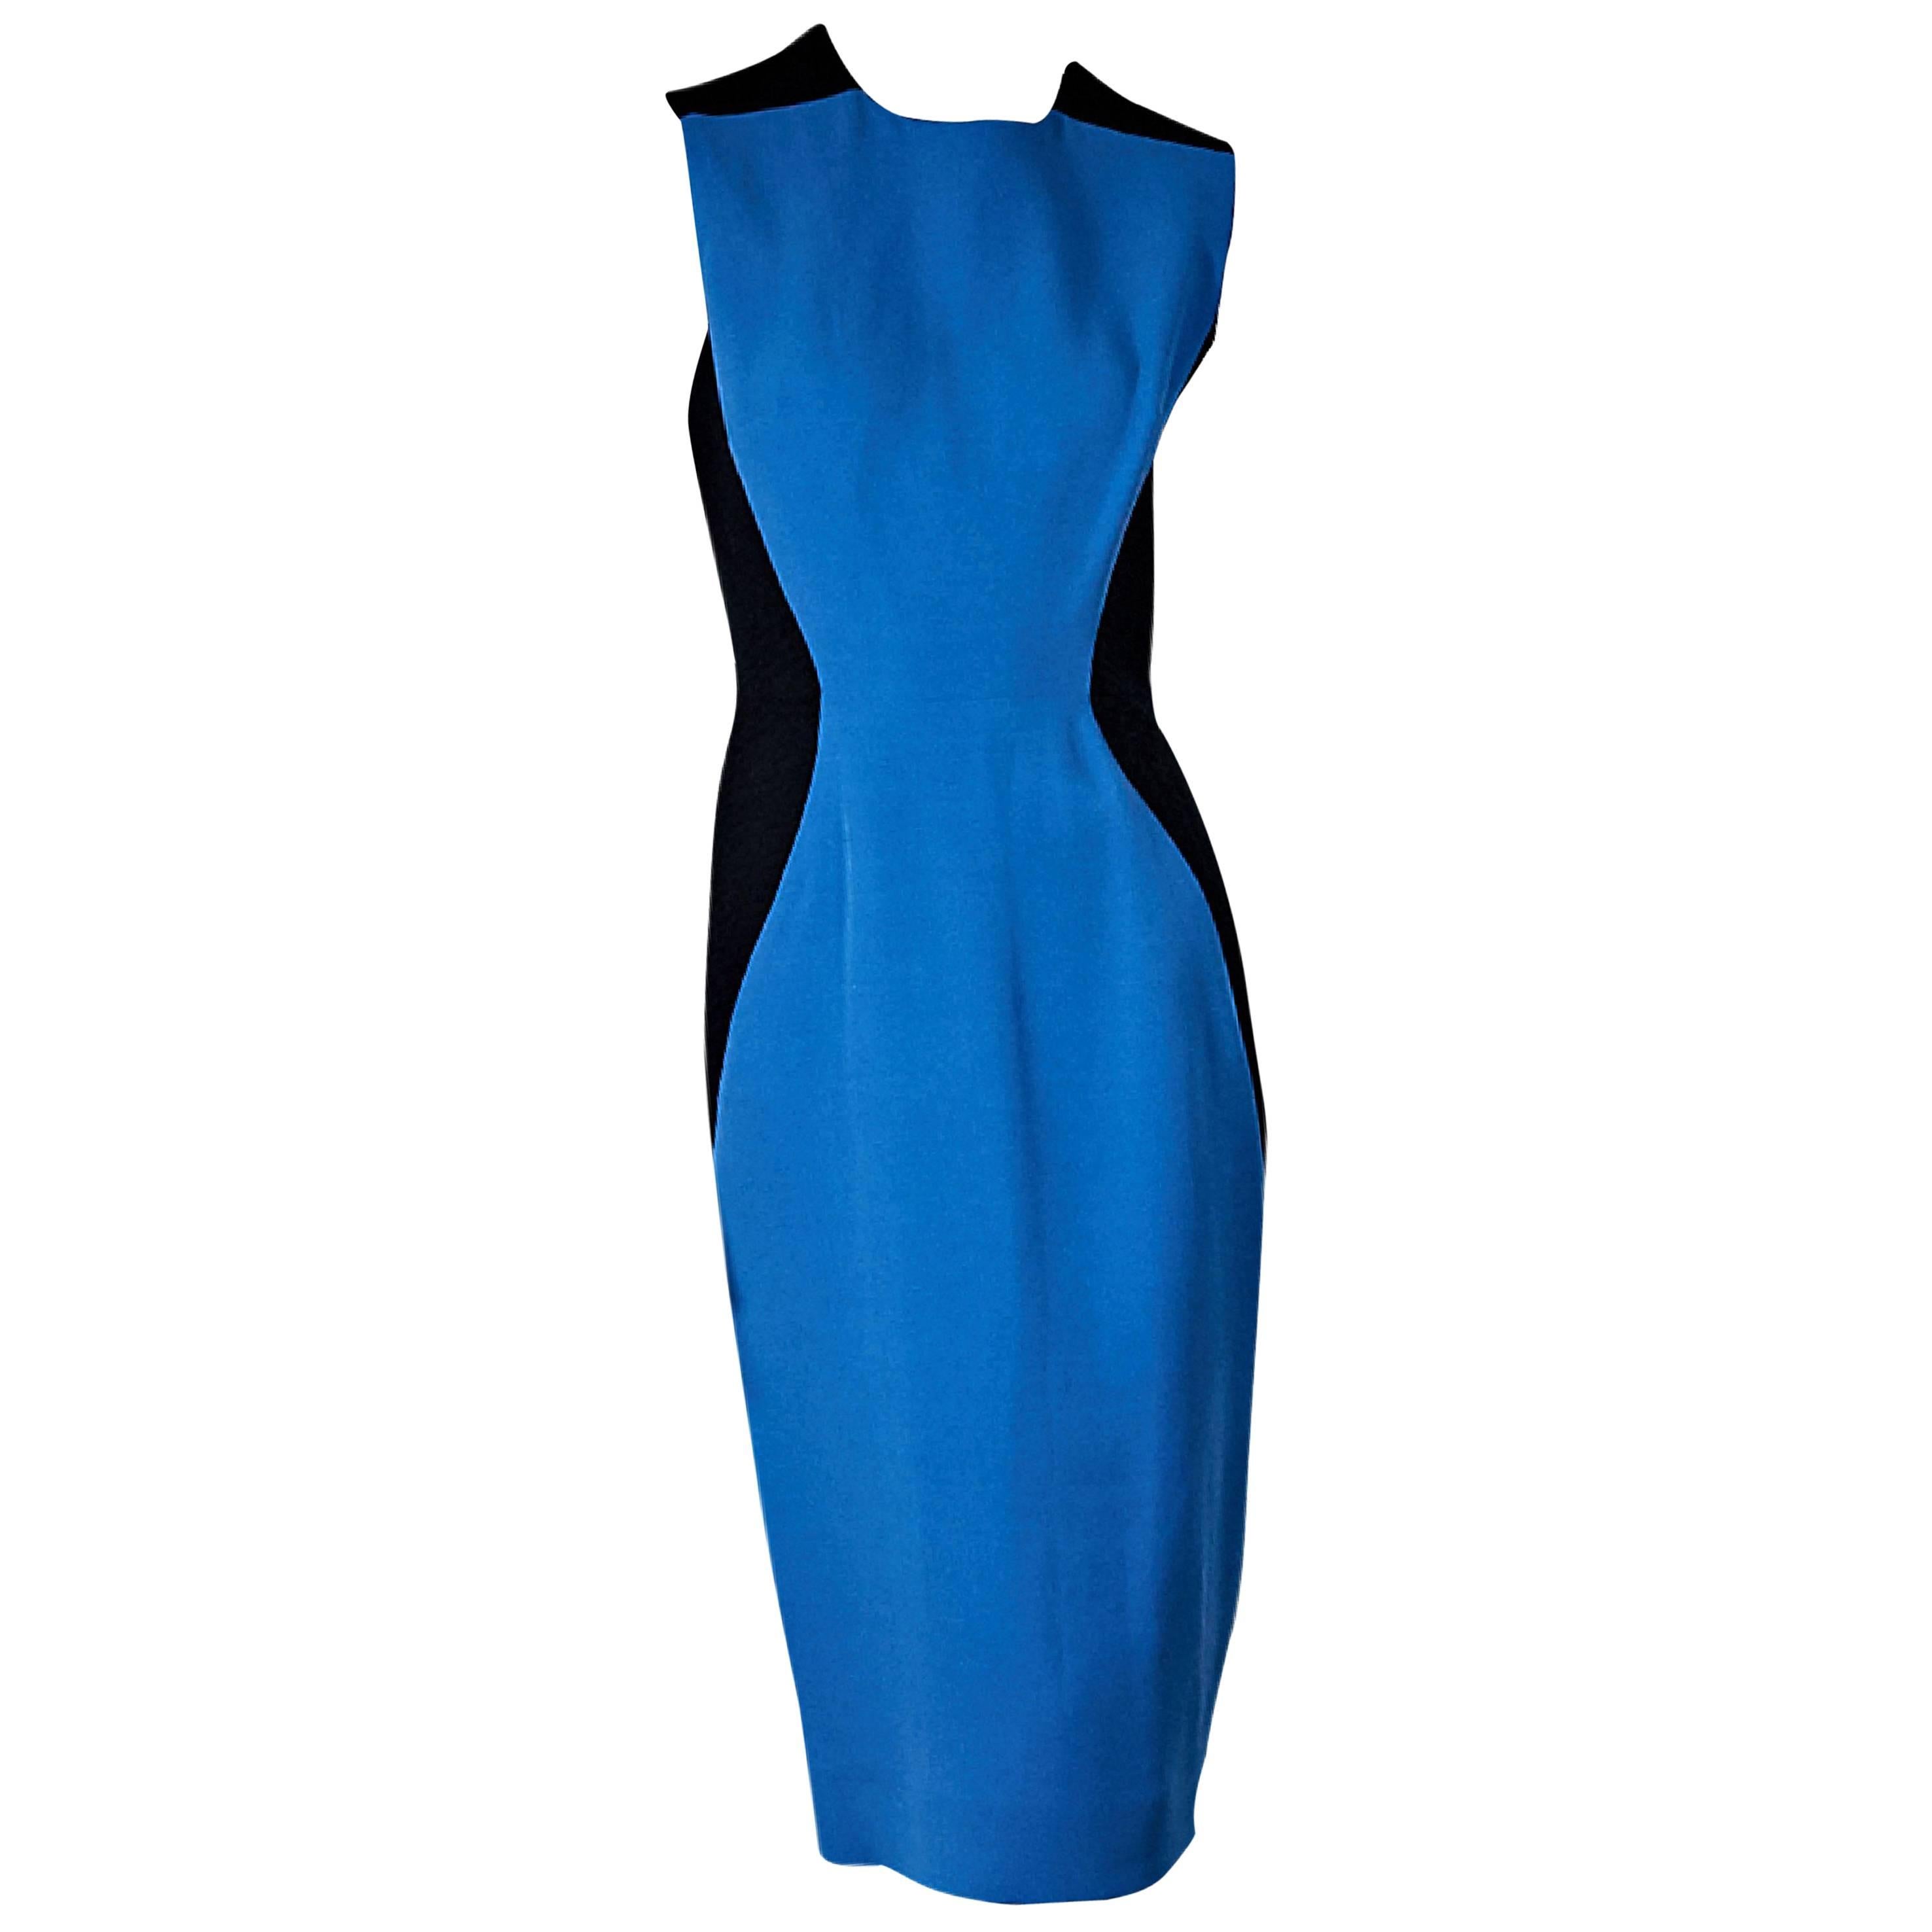 Black & Blue Victoria Beckham Colorblock Sheath Dress